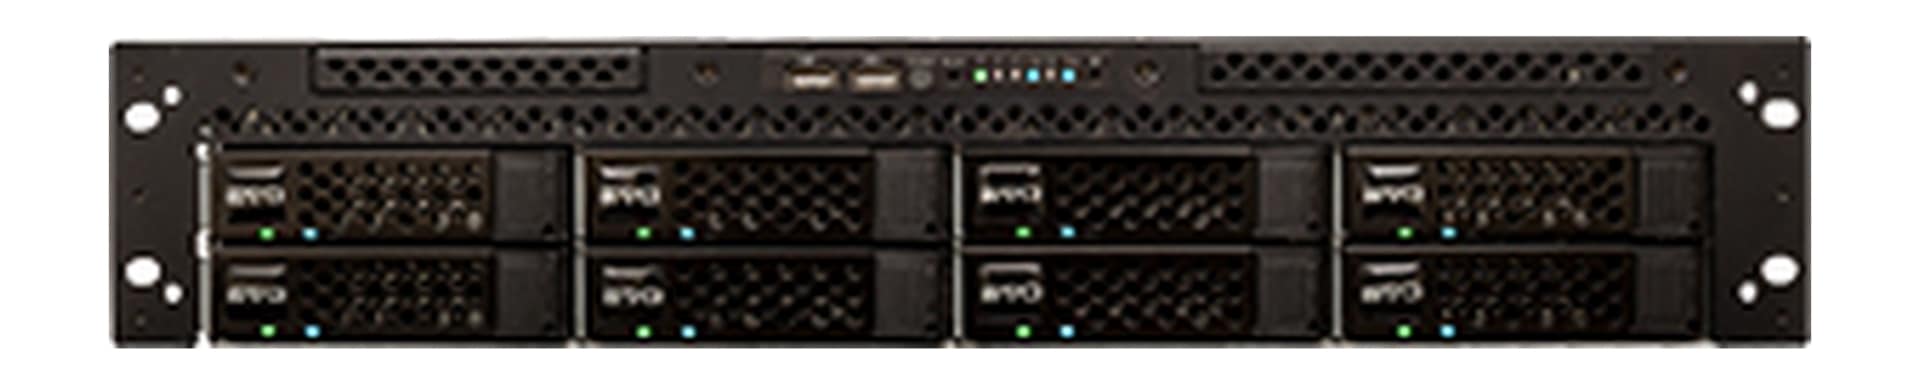 SNS EVO 2U 8 Bay Shared Storage Server with 112TB Raw Capacity Hard Drive